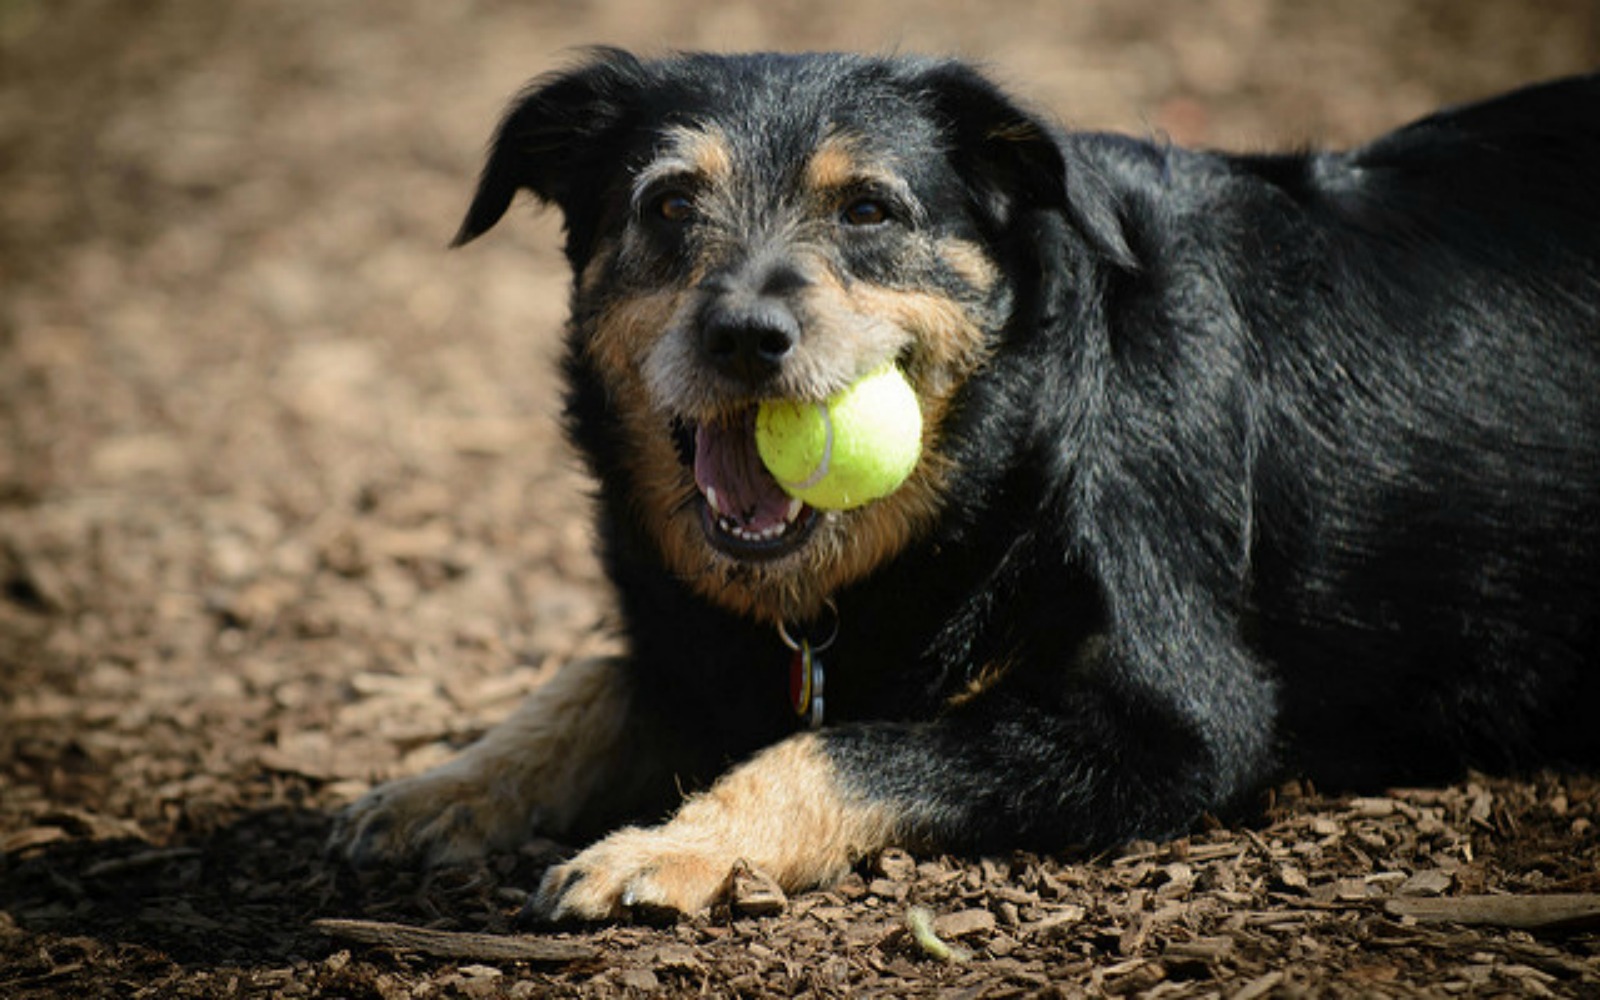 dog chewing tennis ball